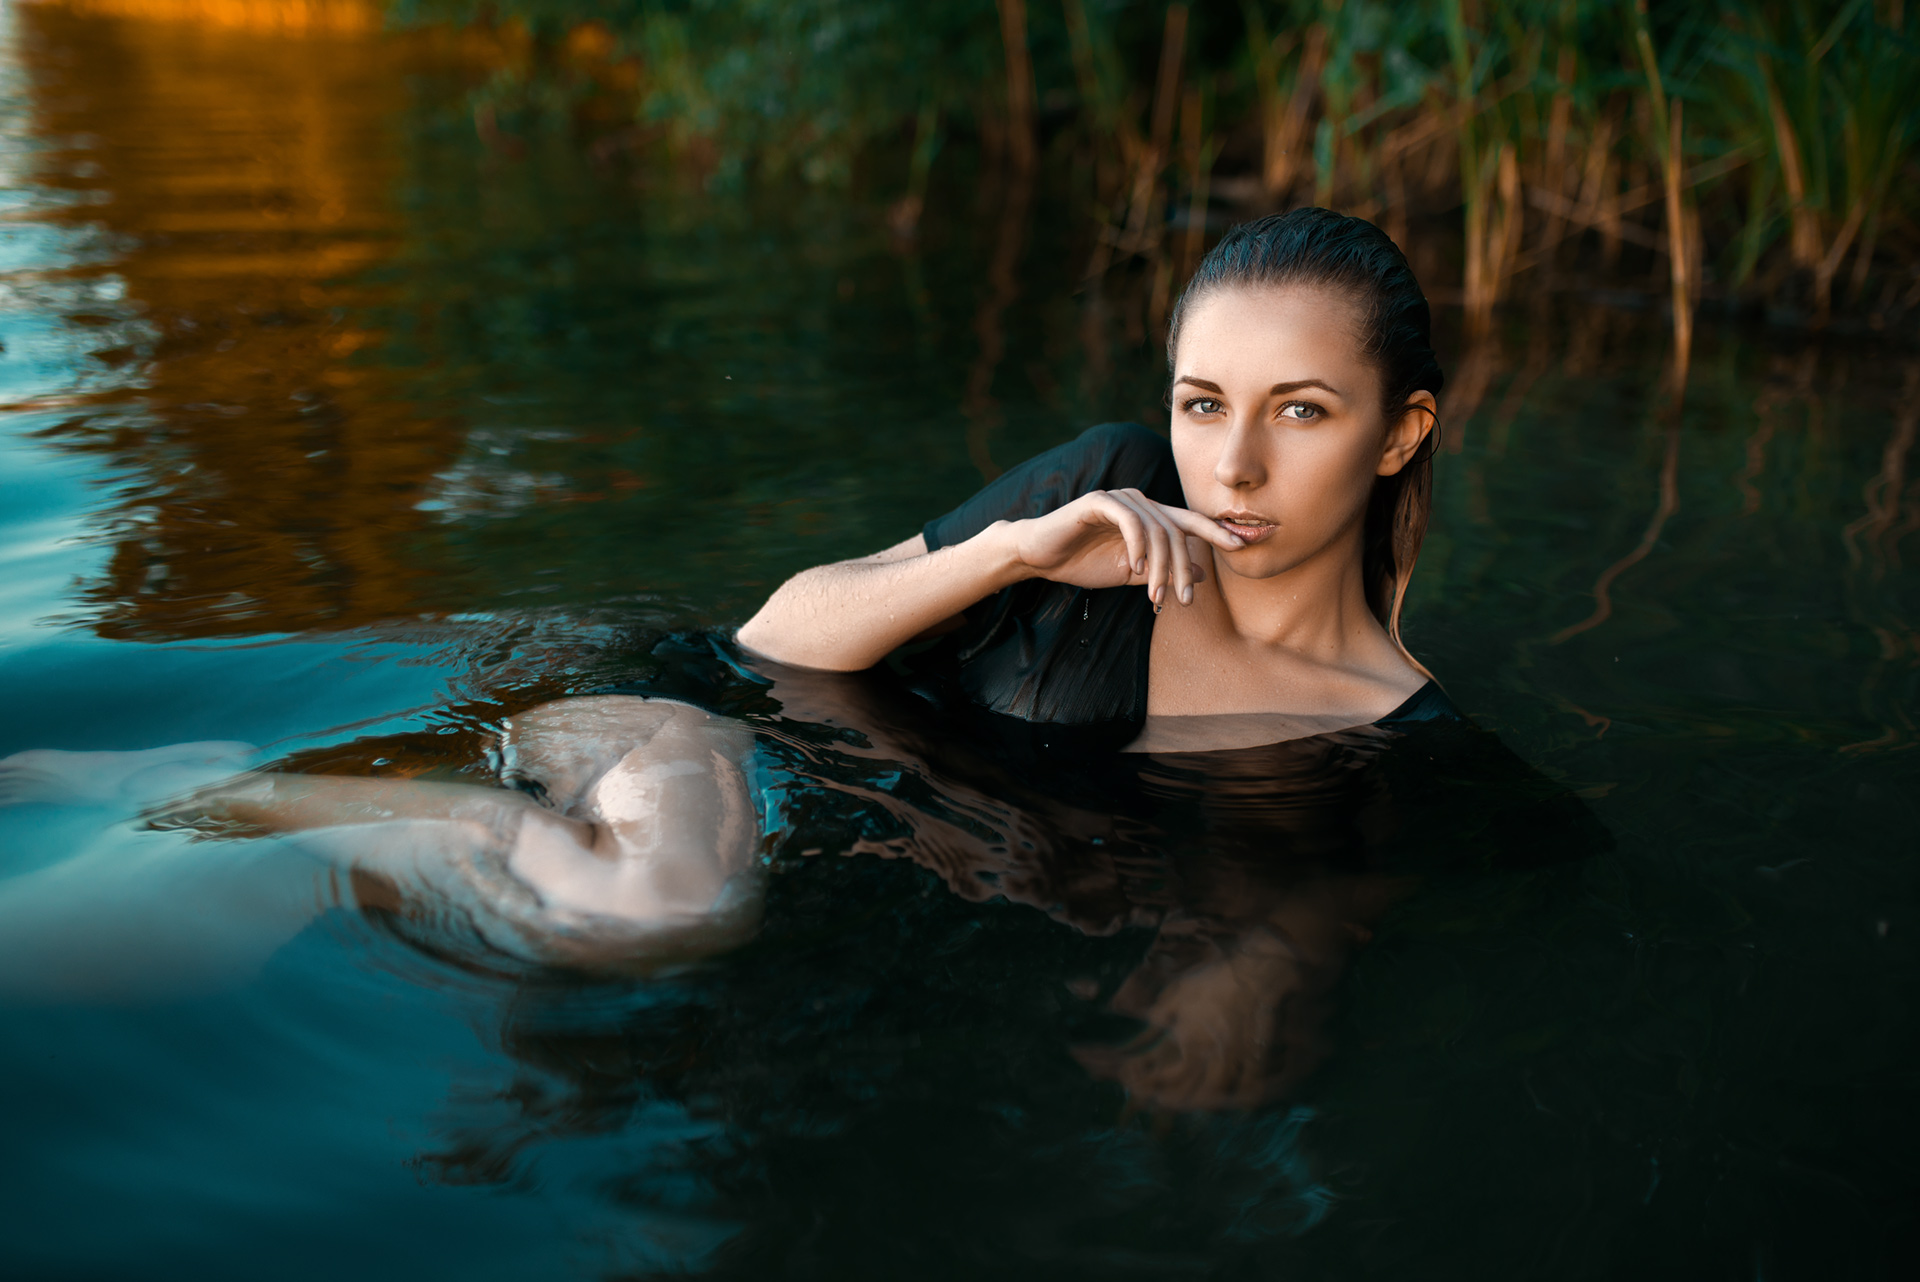 Девушка в воде 18. Фотосессия в воде. Женщина вода. Фотосессия в воде в одежде.